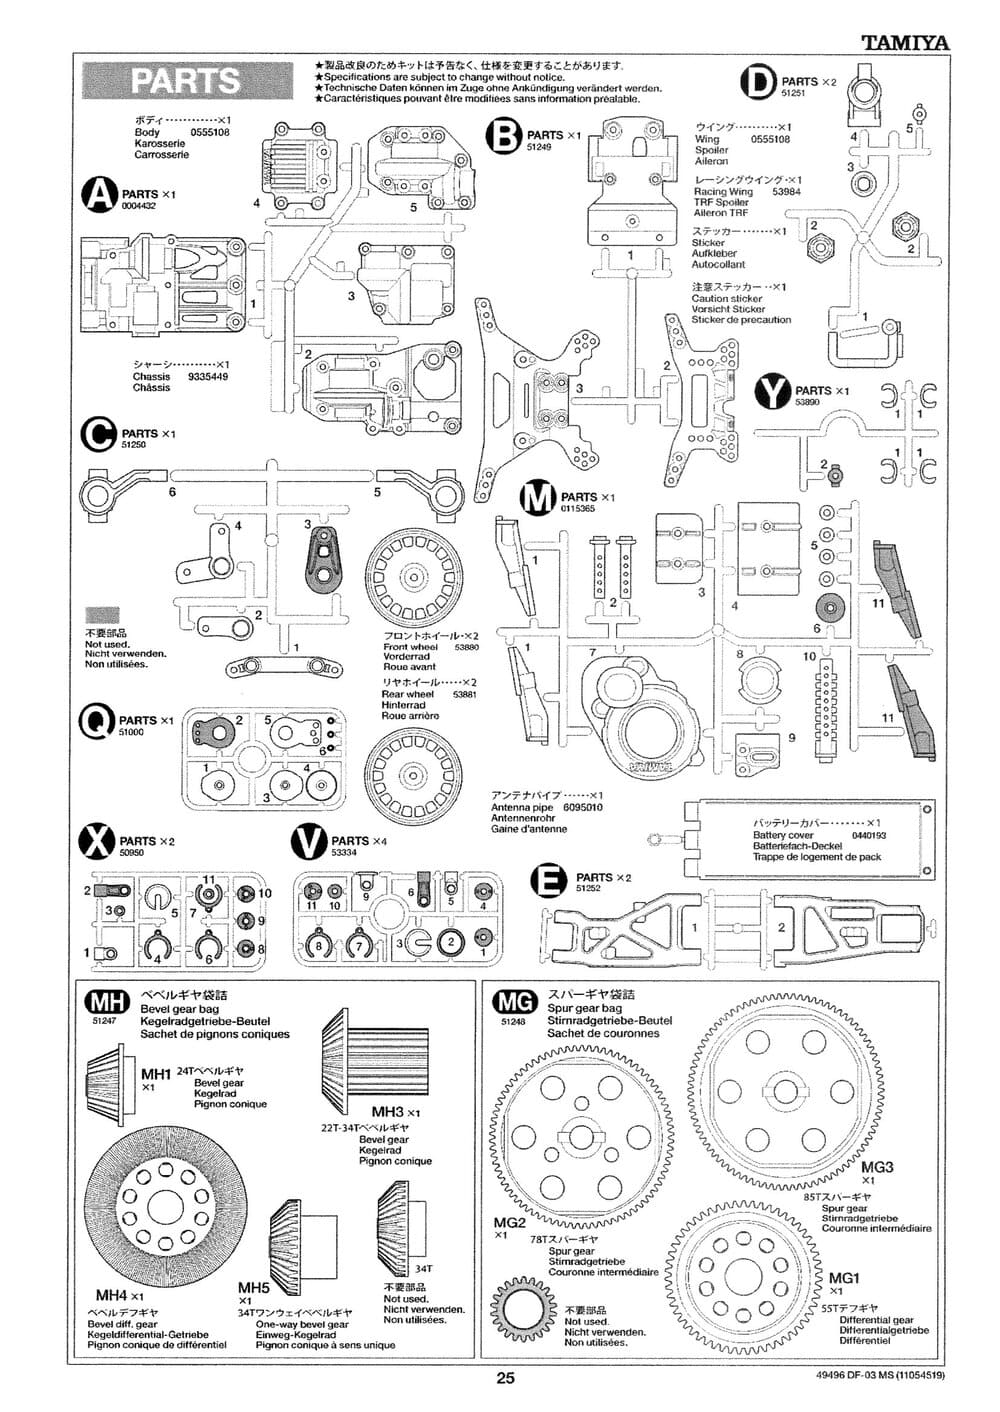 Tamiya - DF-03 MS Chassis Chassis - Manual - Page 25